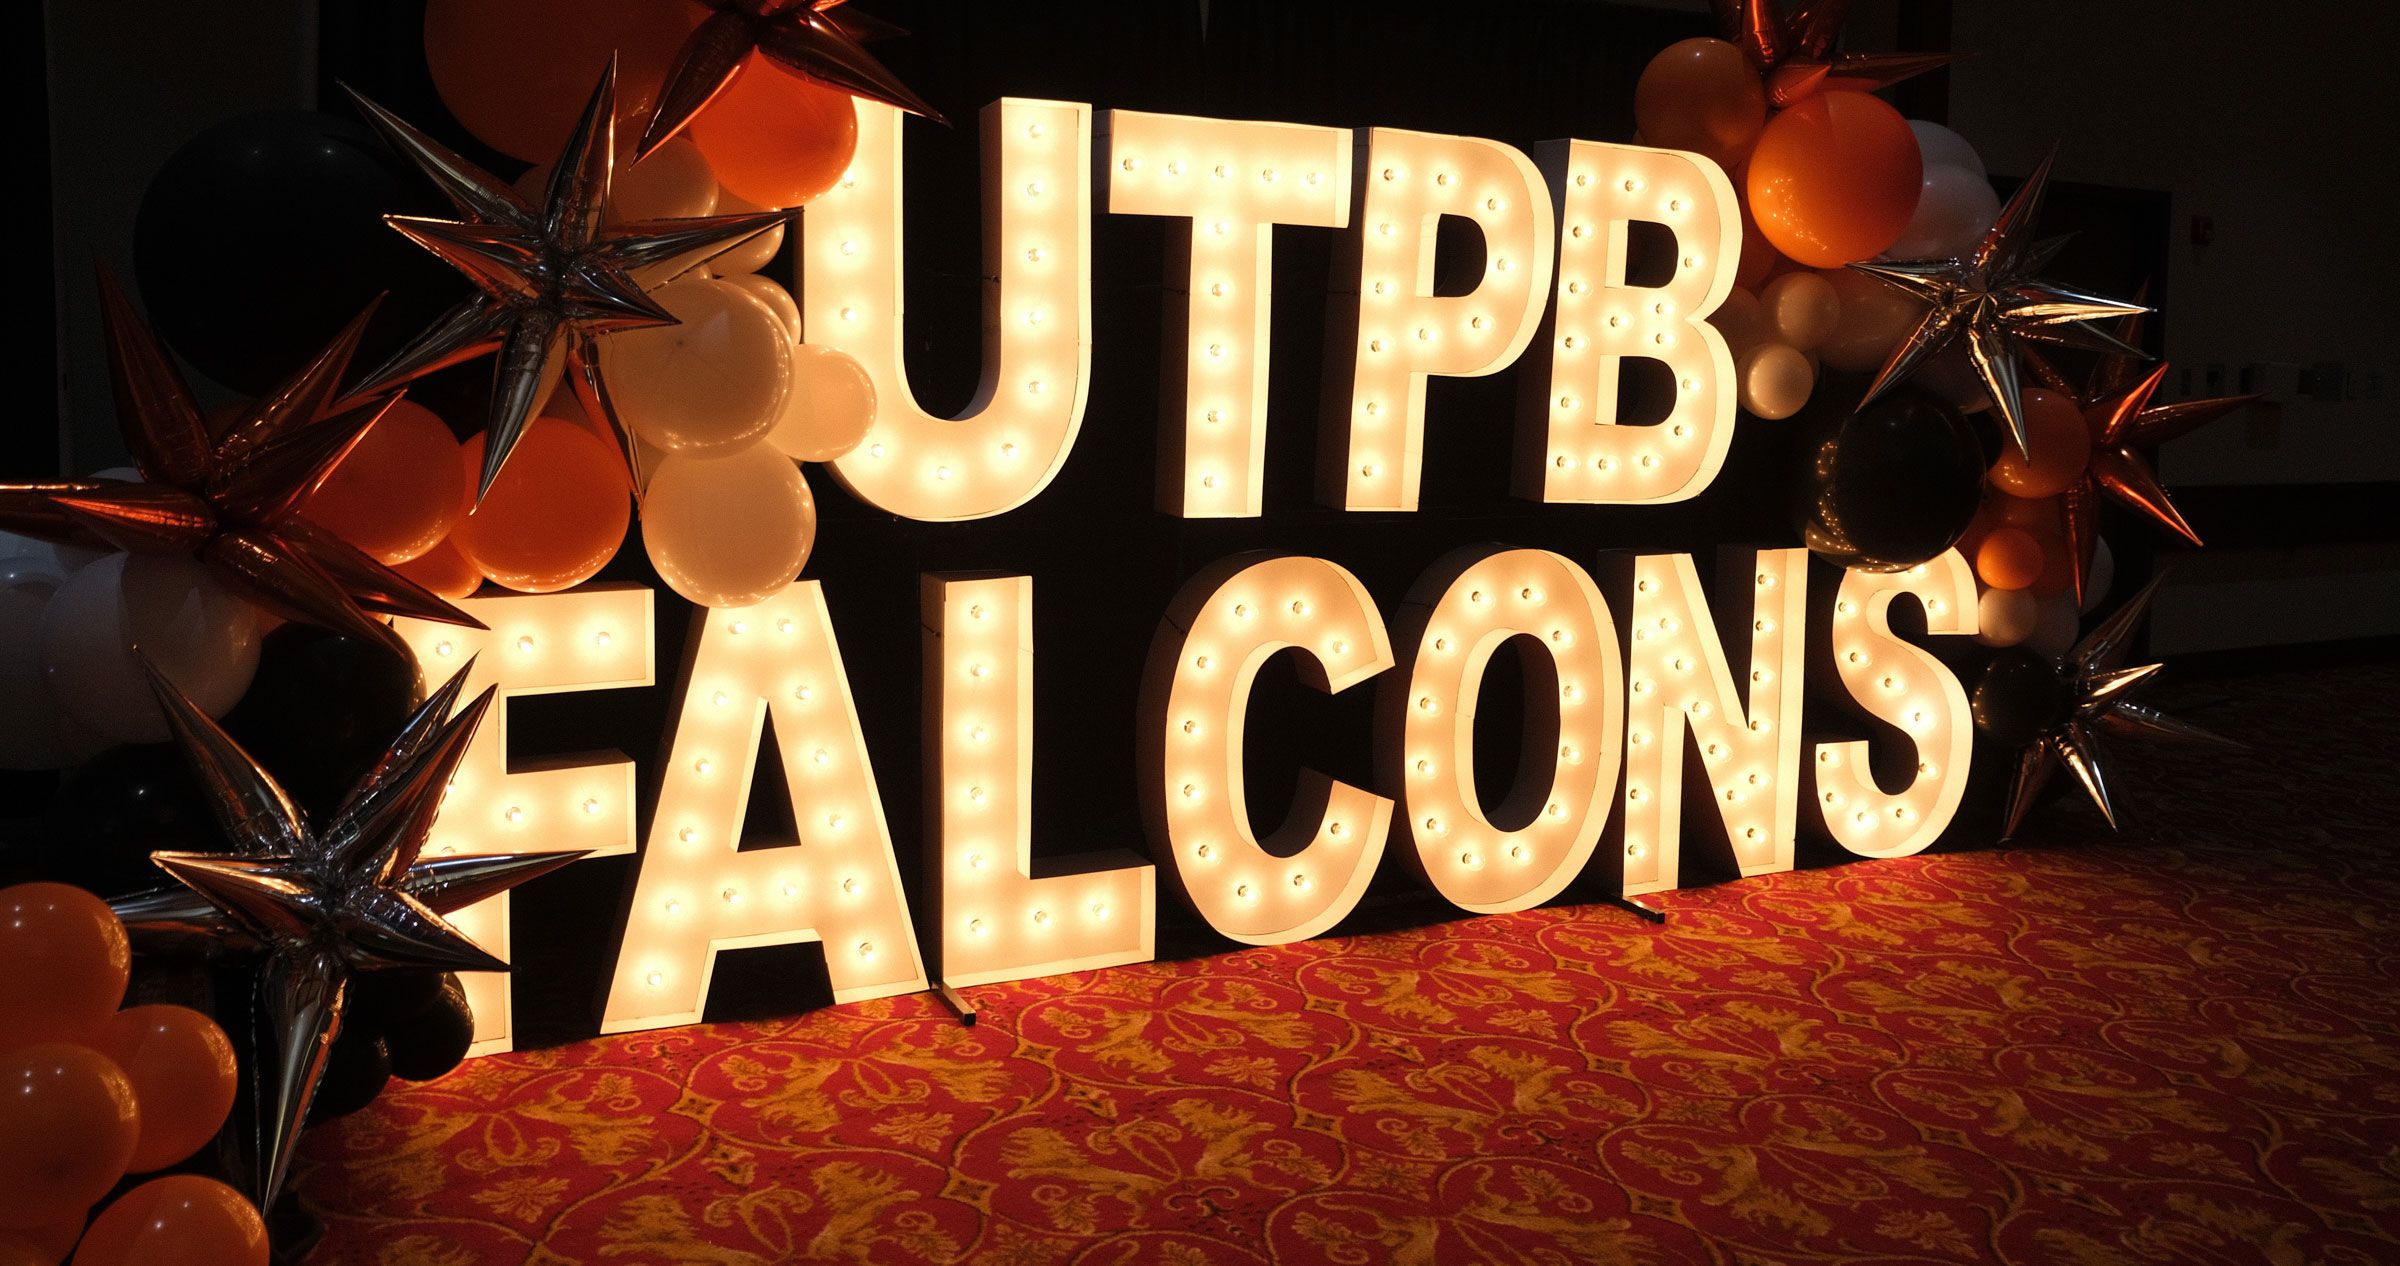 UTPB Falcons in Lights